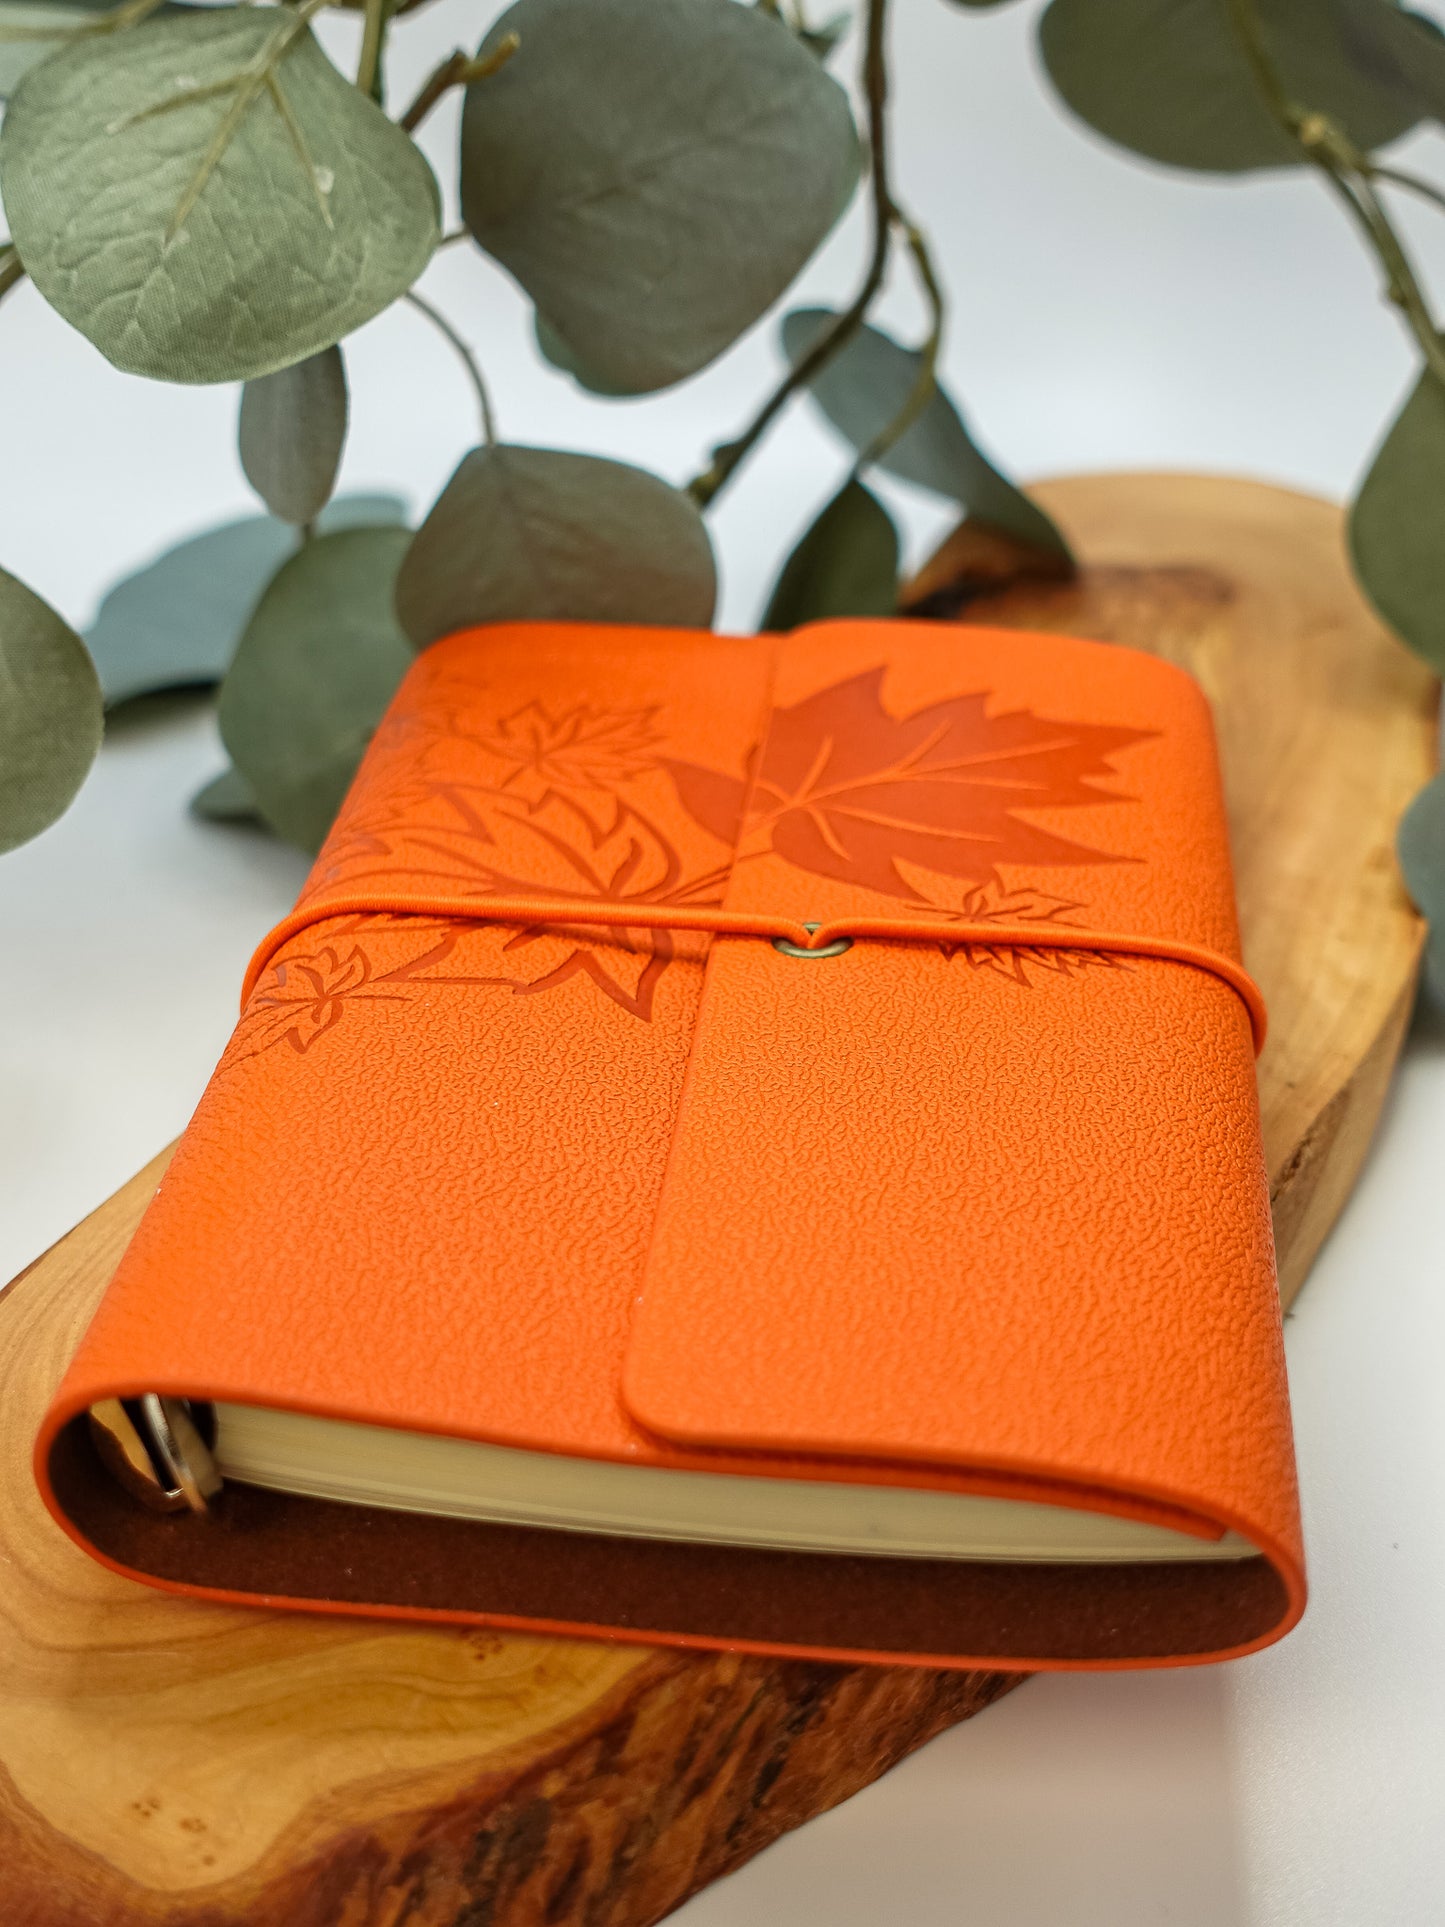 Leaf Notebook - Elastic Close